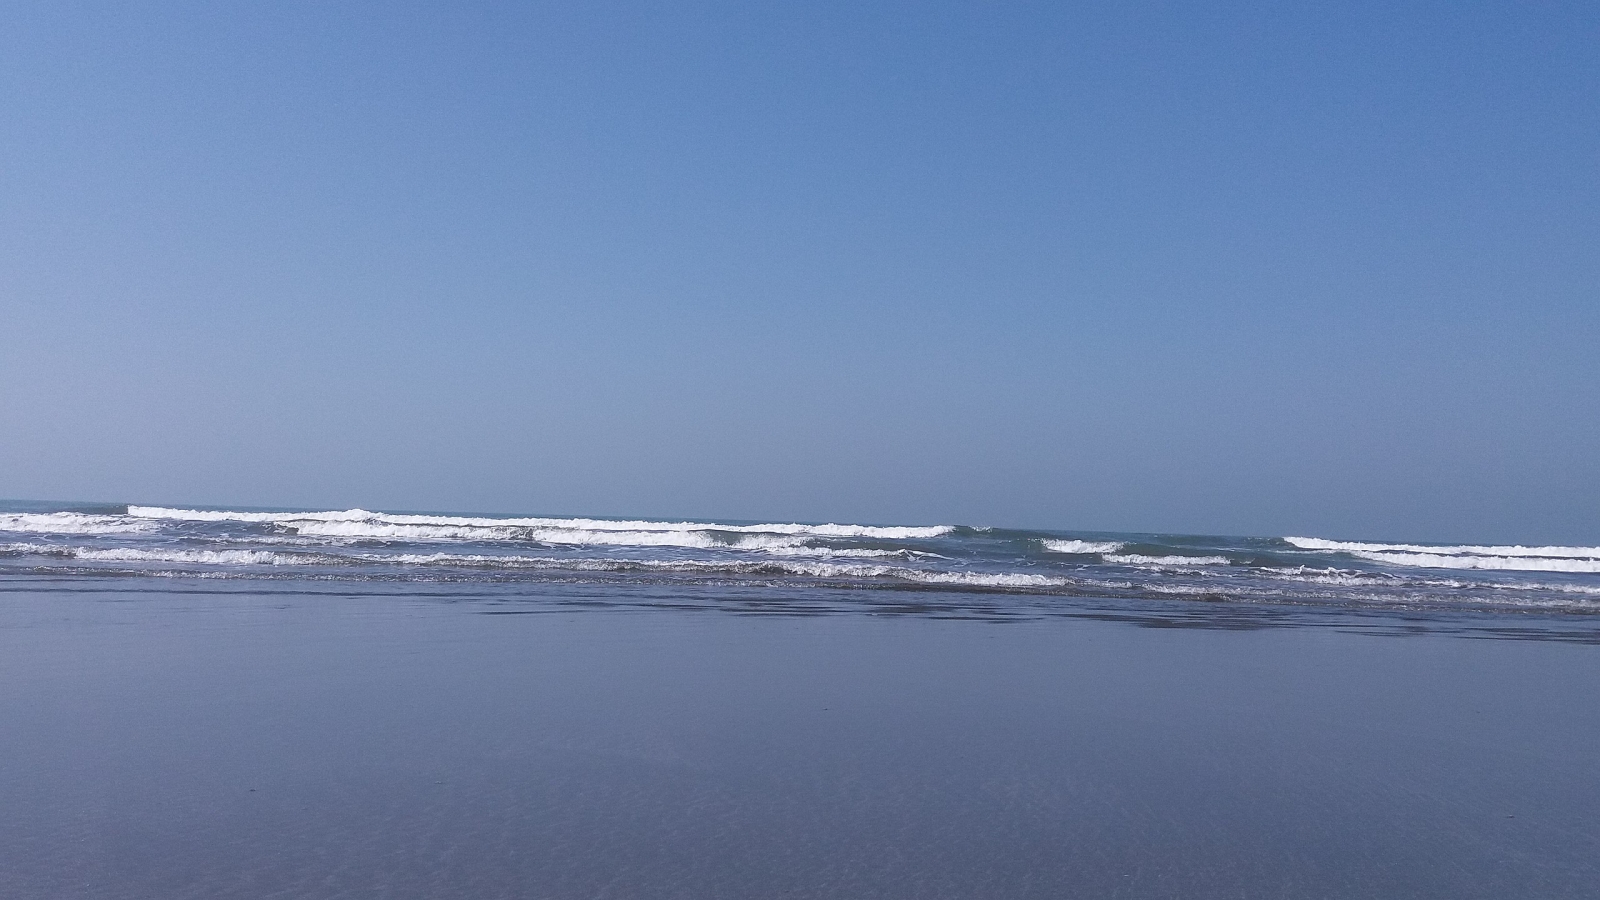 Cox’s Bazar: 120 km of golden sandy beach in Bangladesh